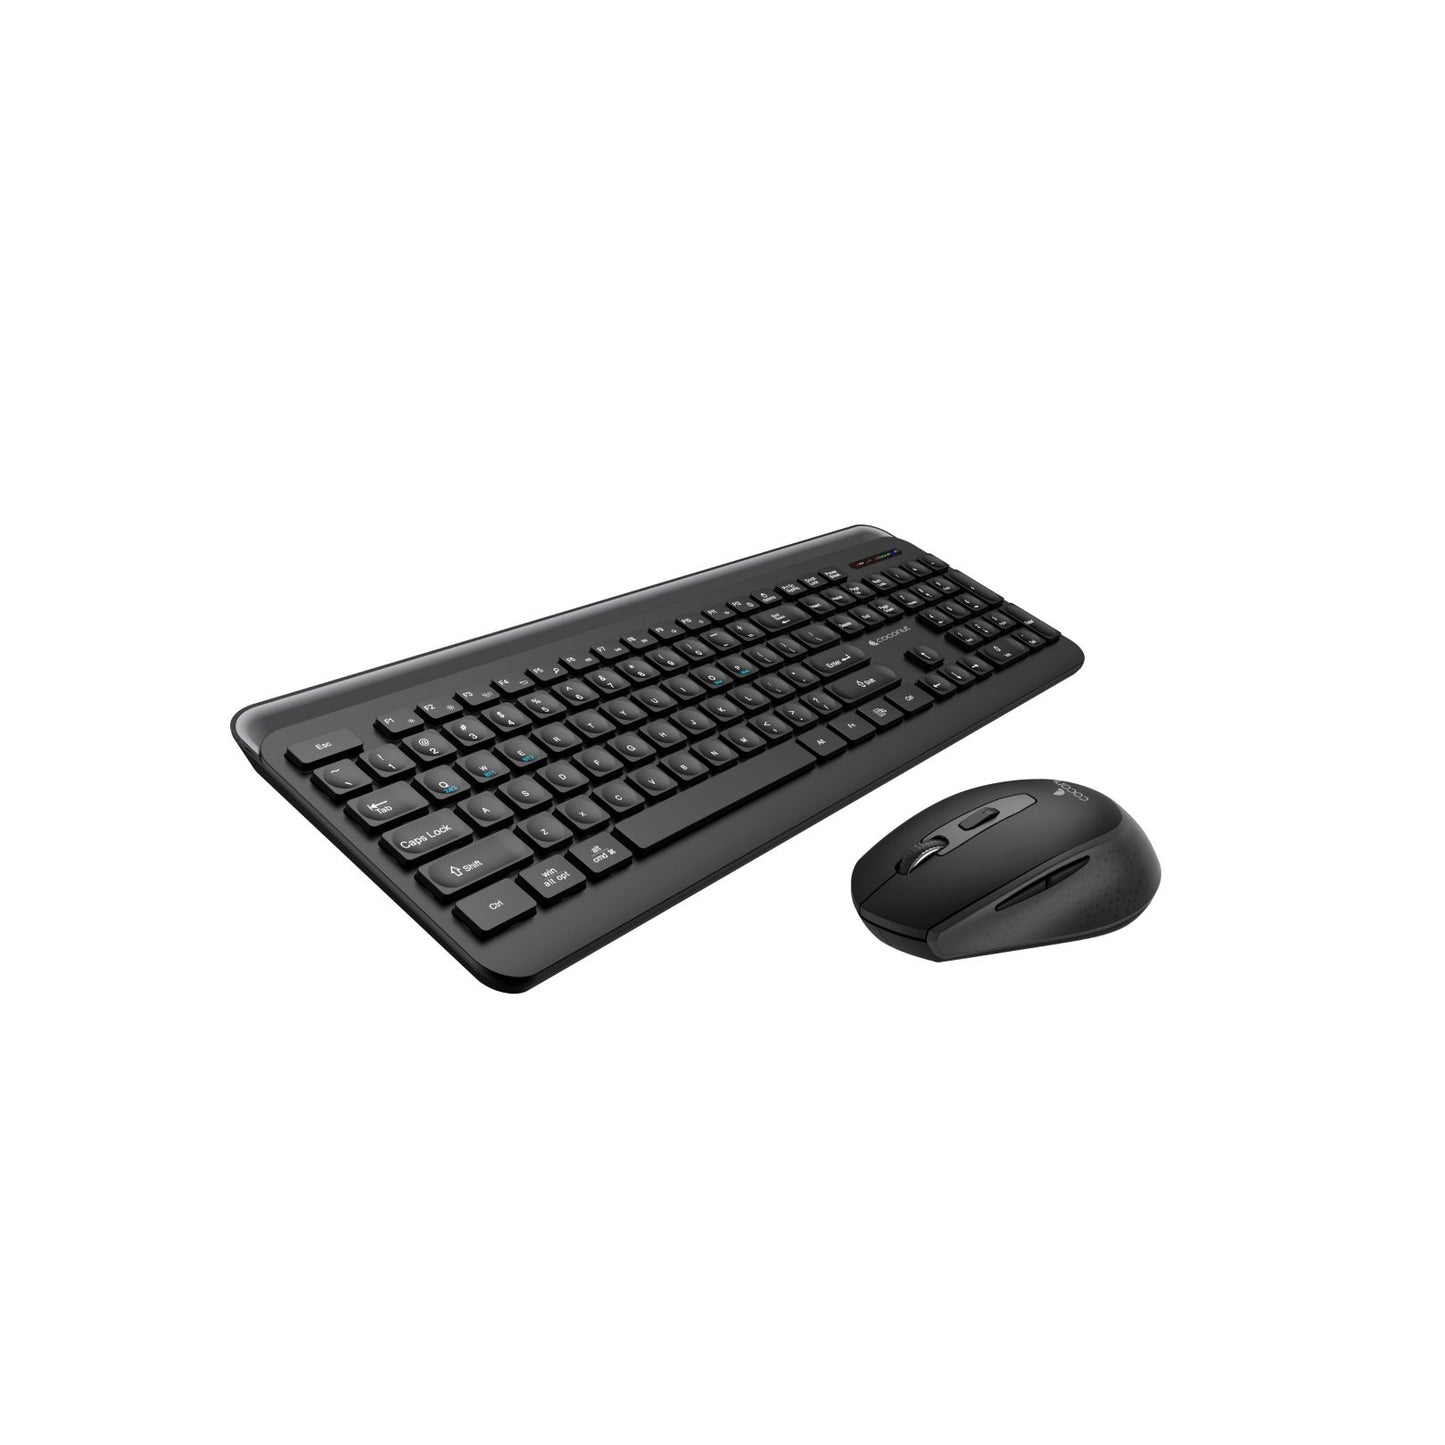 Sapphire Wireless Keyboard Mouse Combo